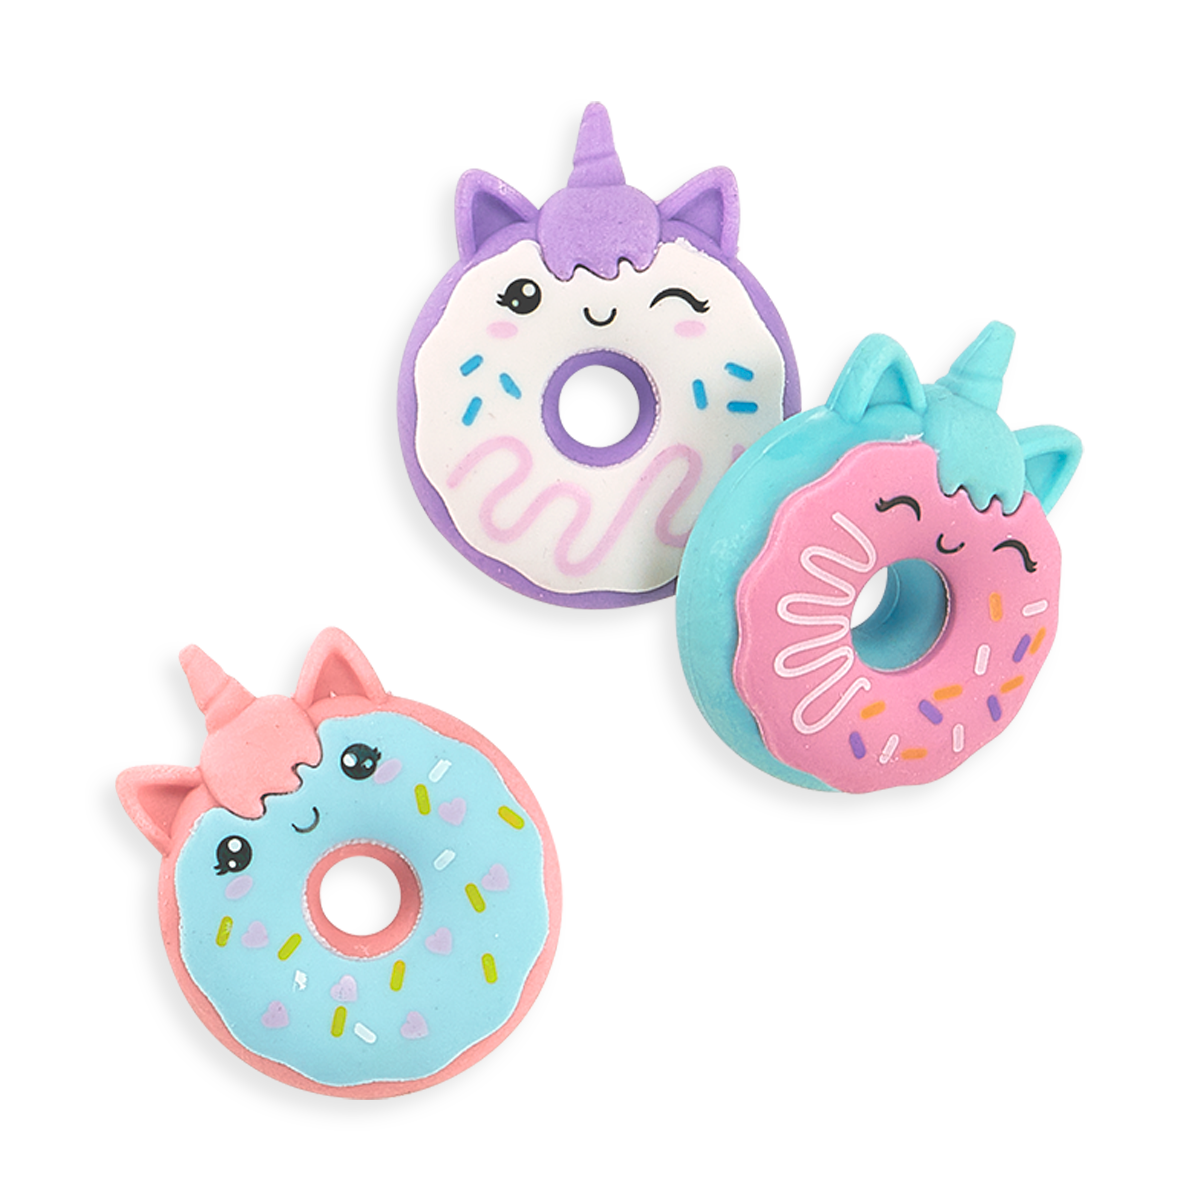 Ooly - Click-It Erasers: Sugar Joy Donuts